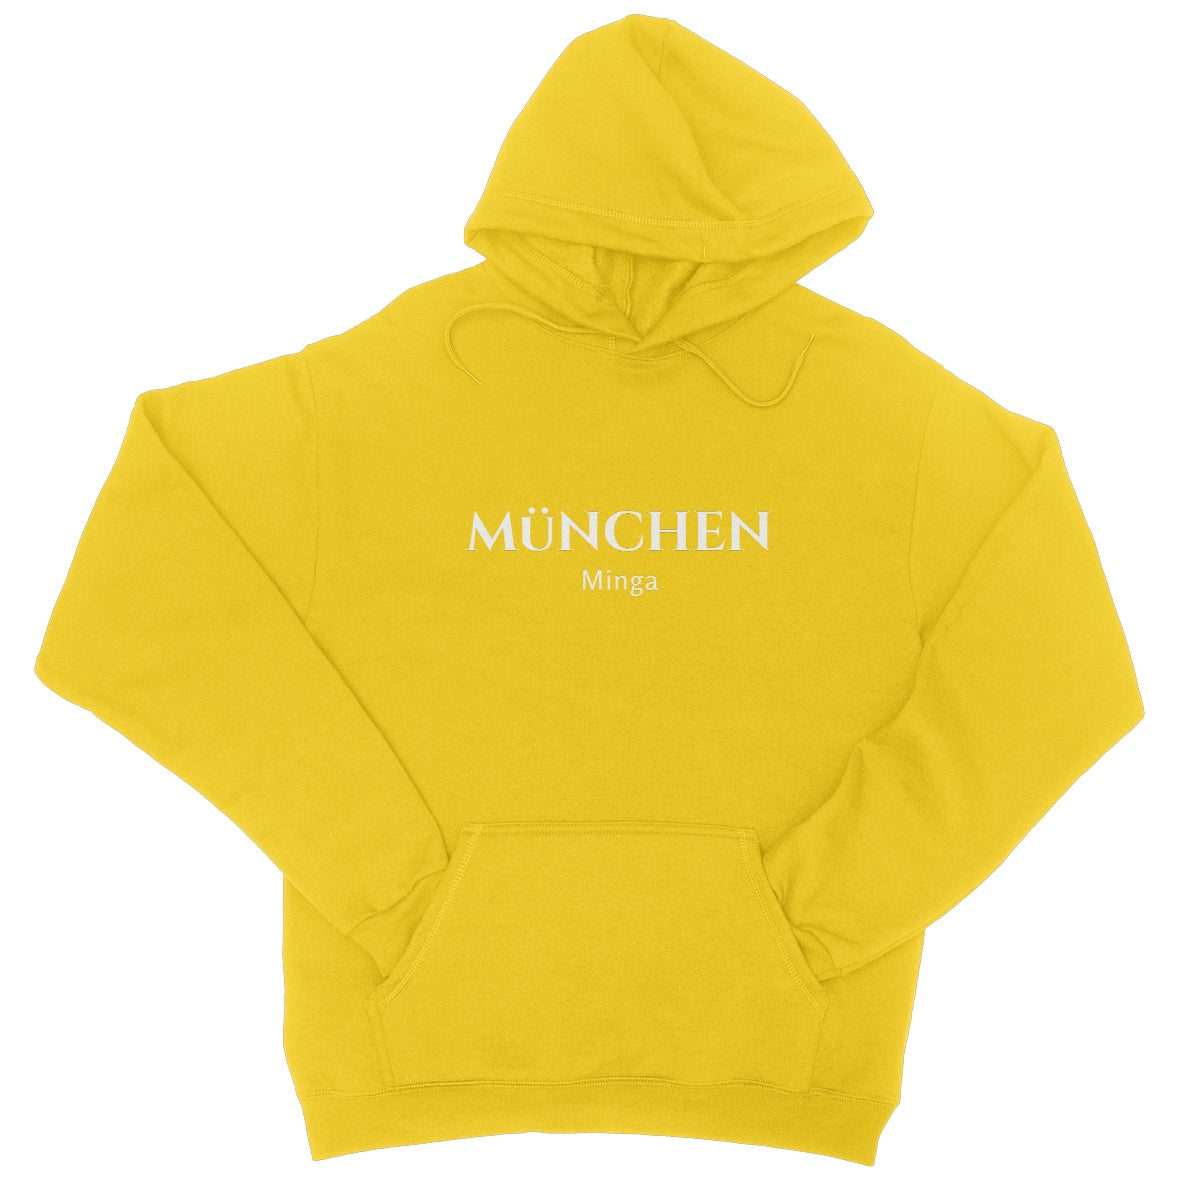 Unisex Bavarian Graphic Hoodie "Minga" Munich, white print - 12 colours - Bavari Shop - Bavarian Outfits, Dirndl, Lederhosen & Accessories